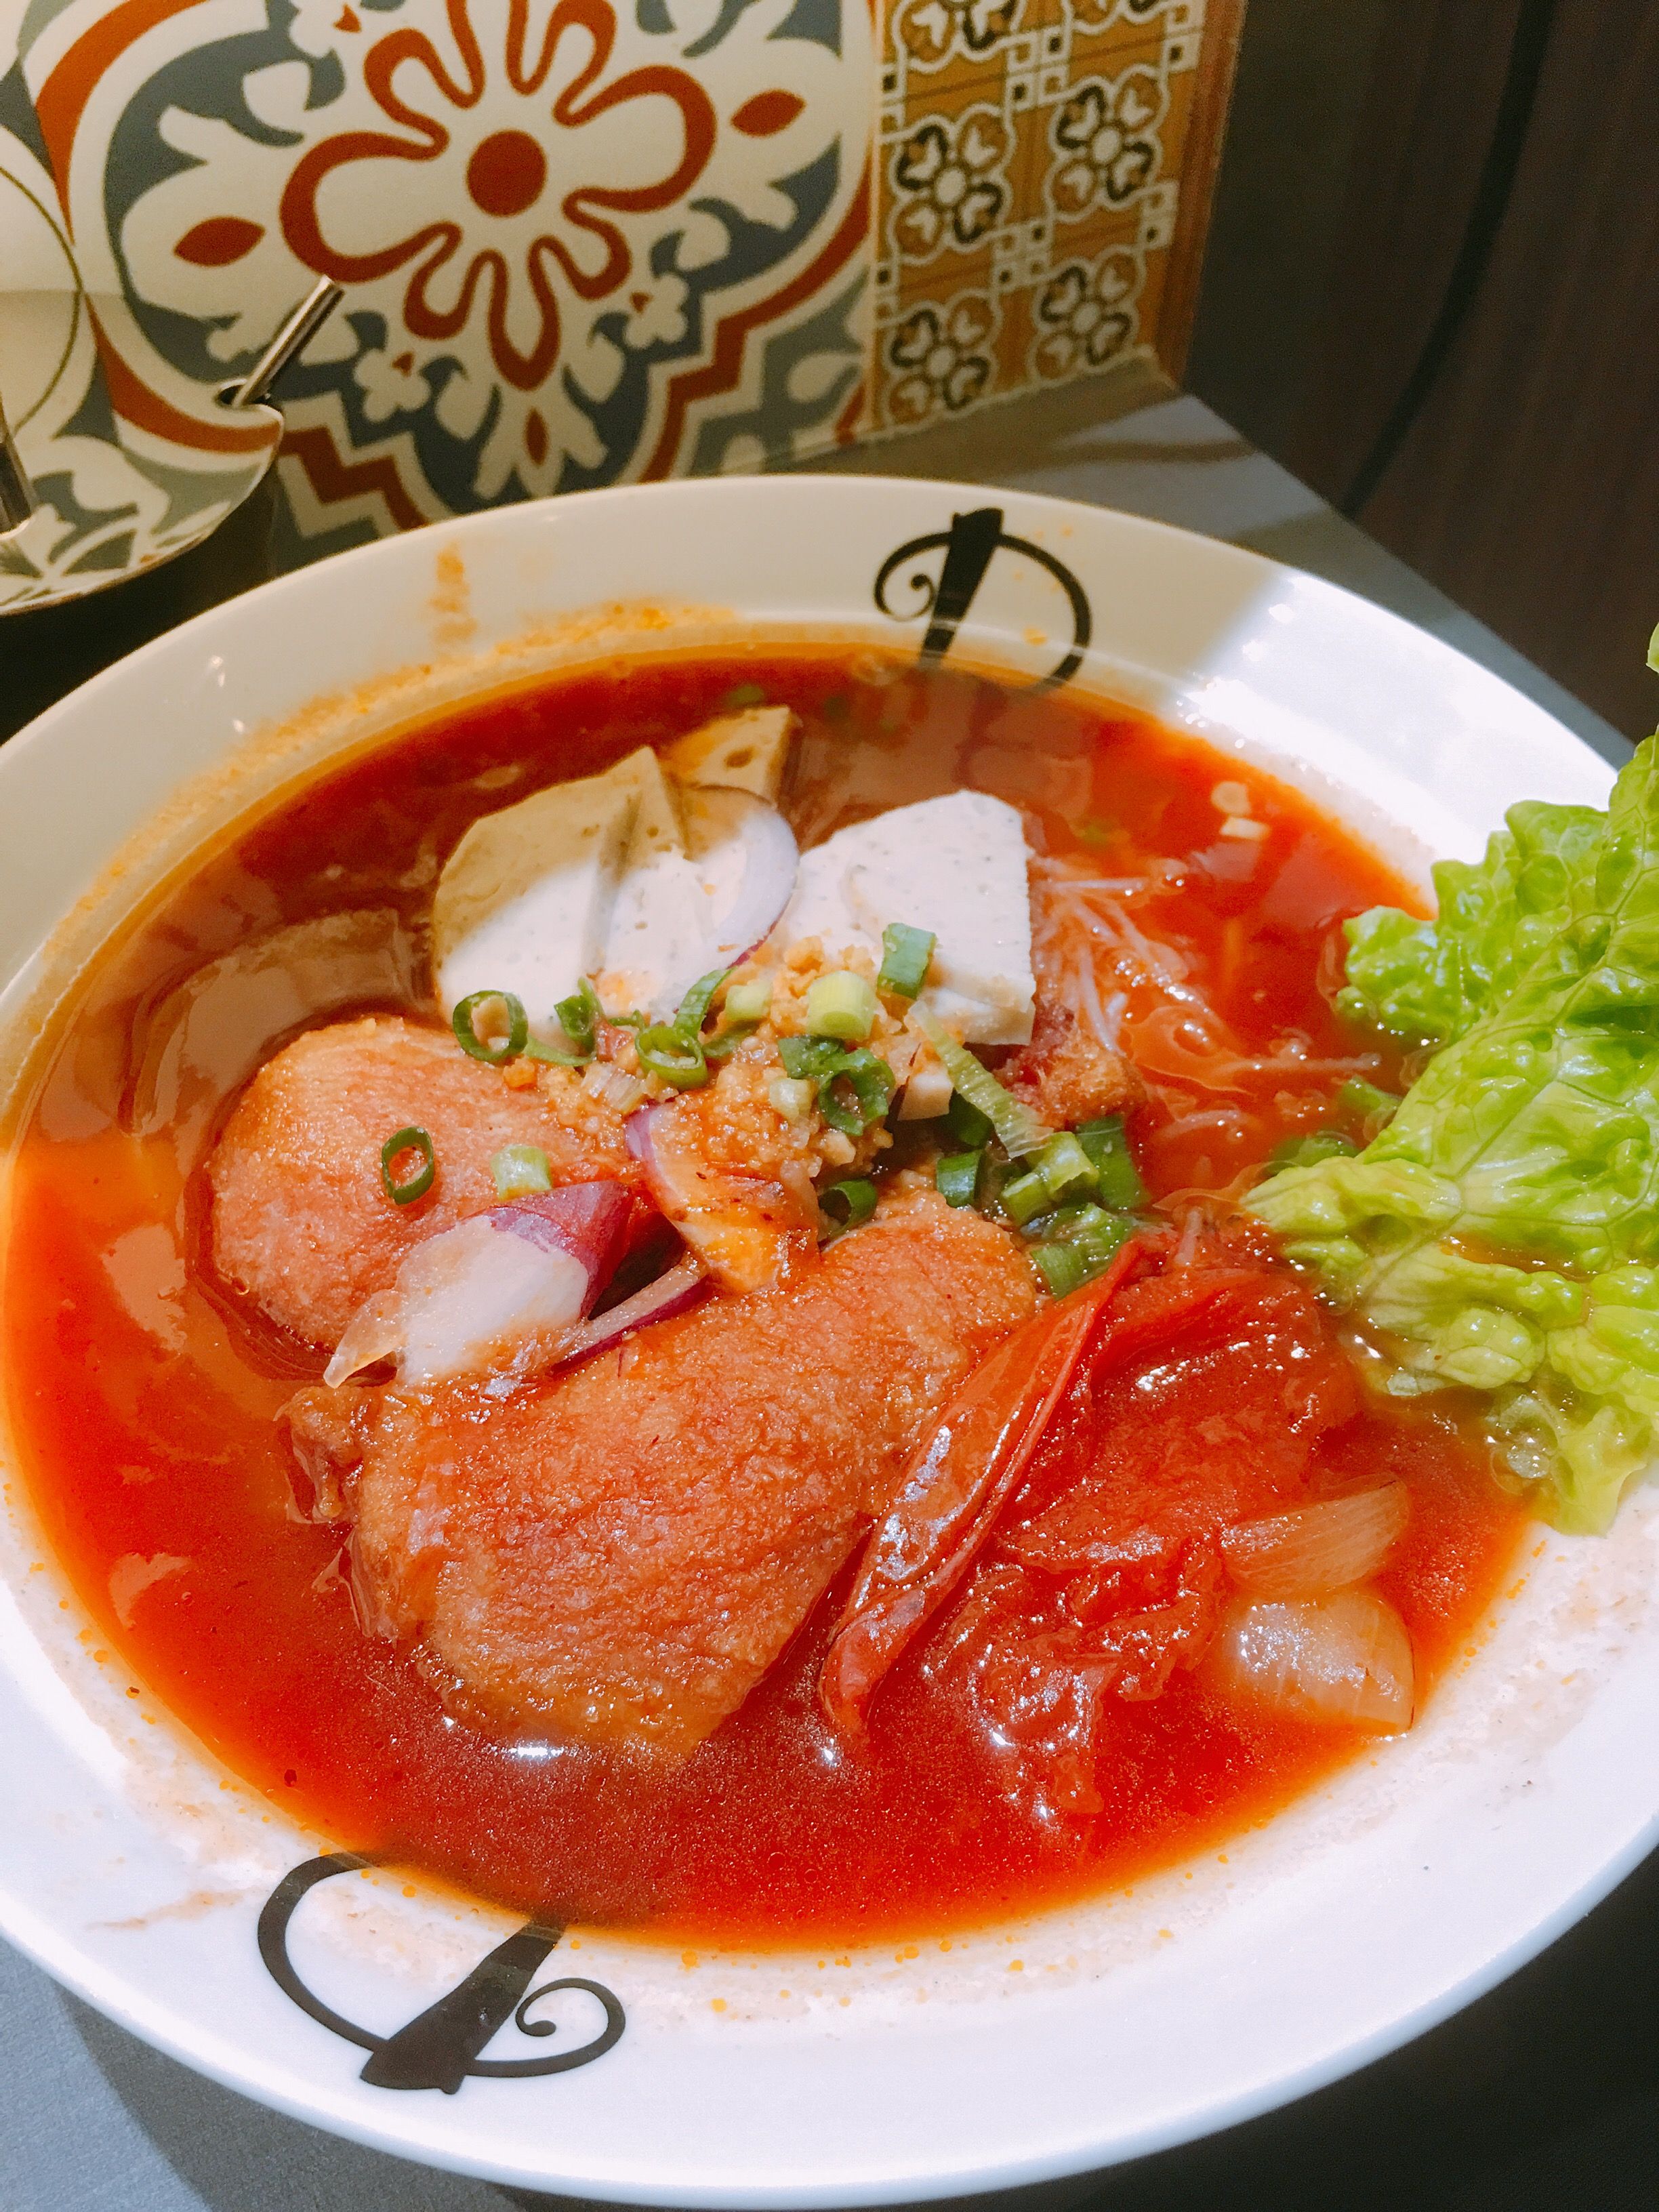 HotFoodHK #9: Vietnamese Noodles in Tomato Soup